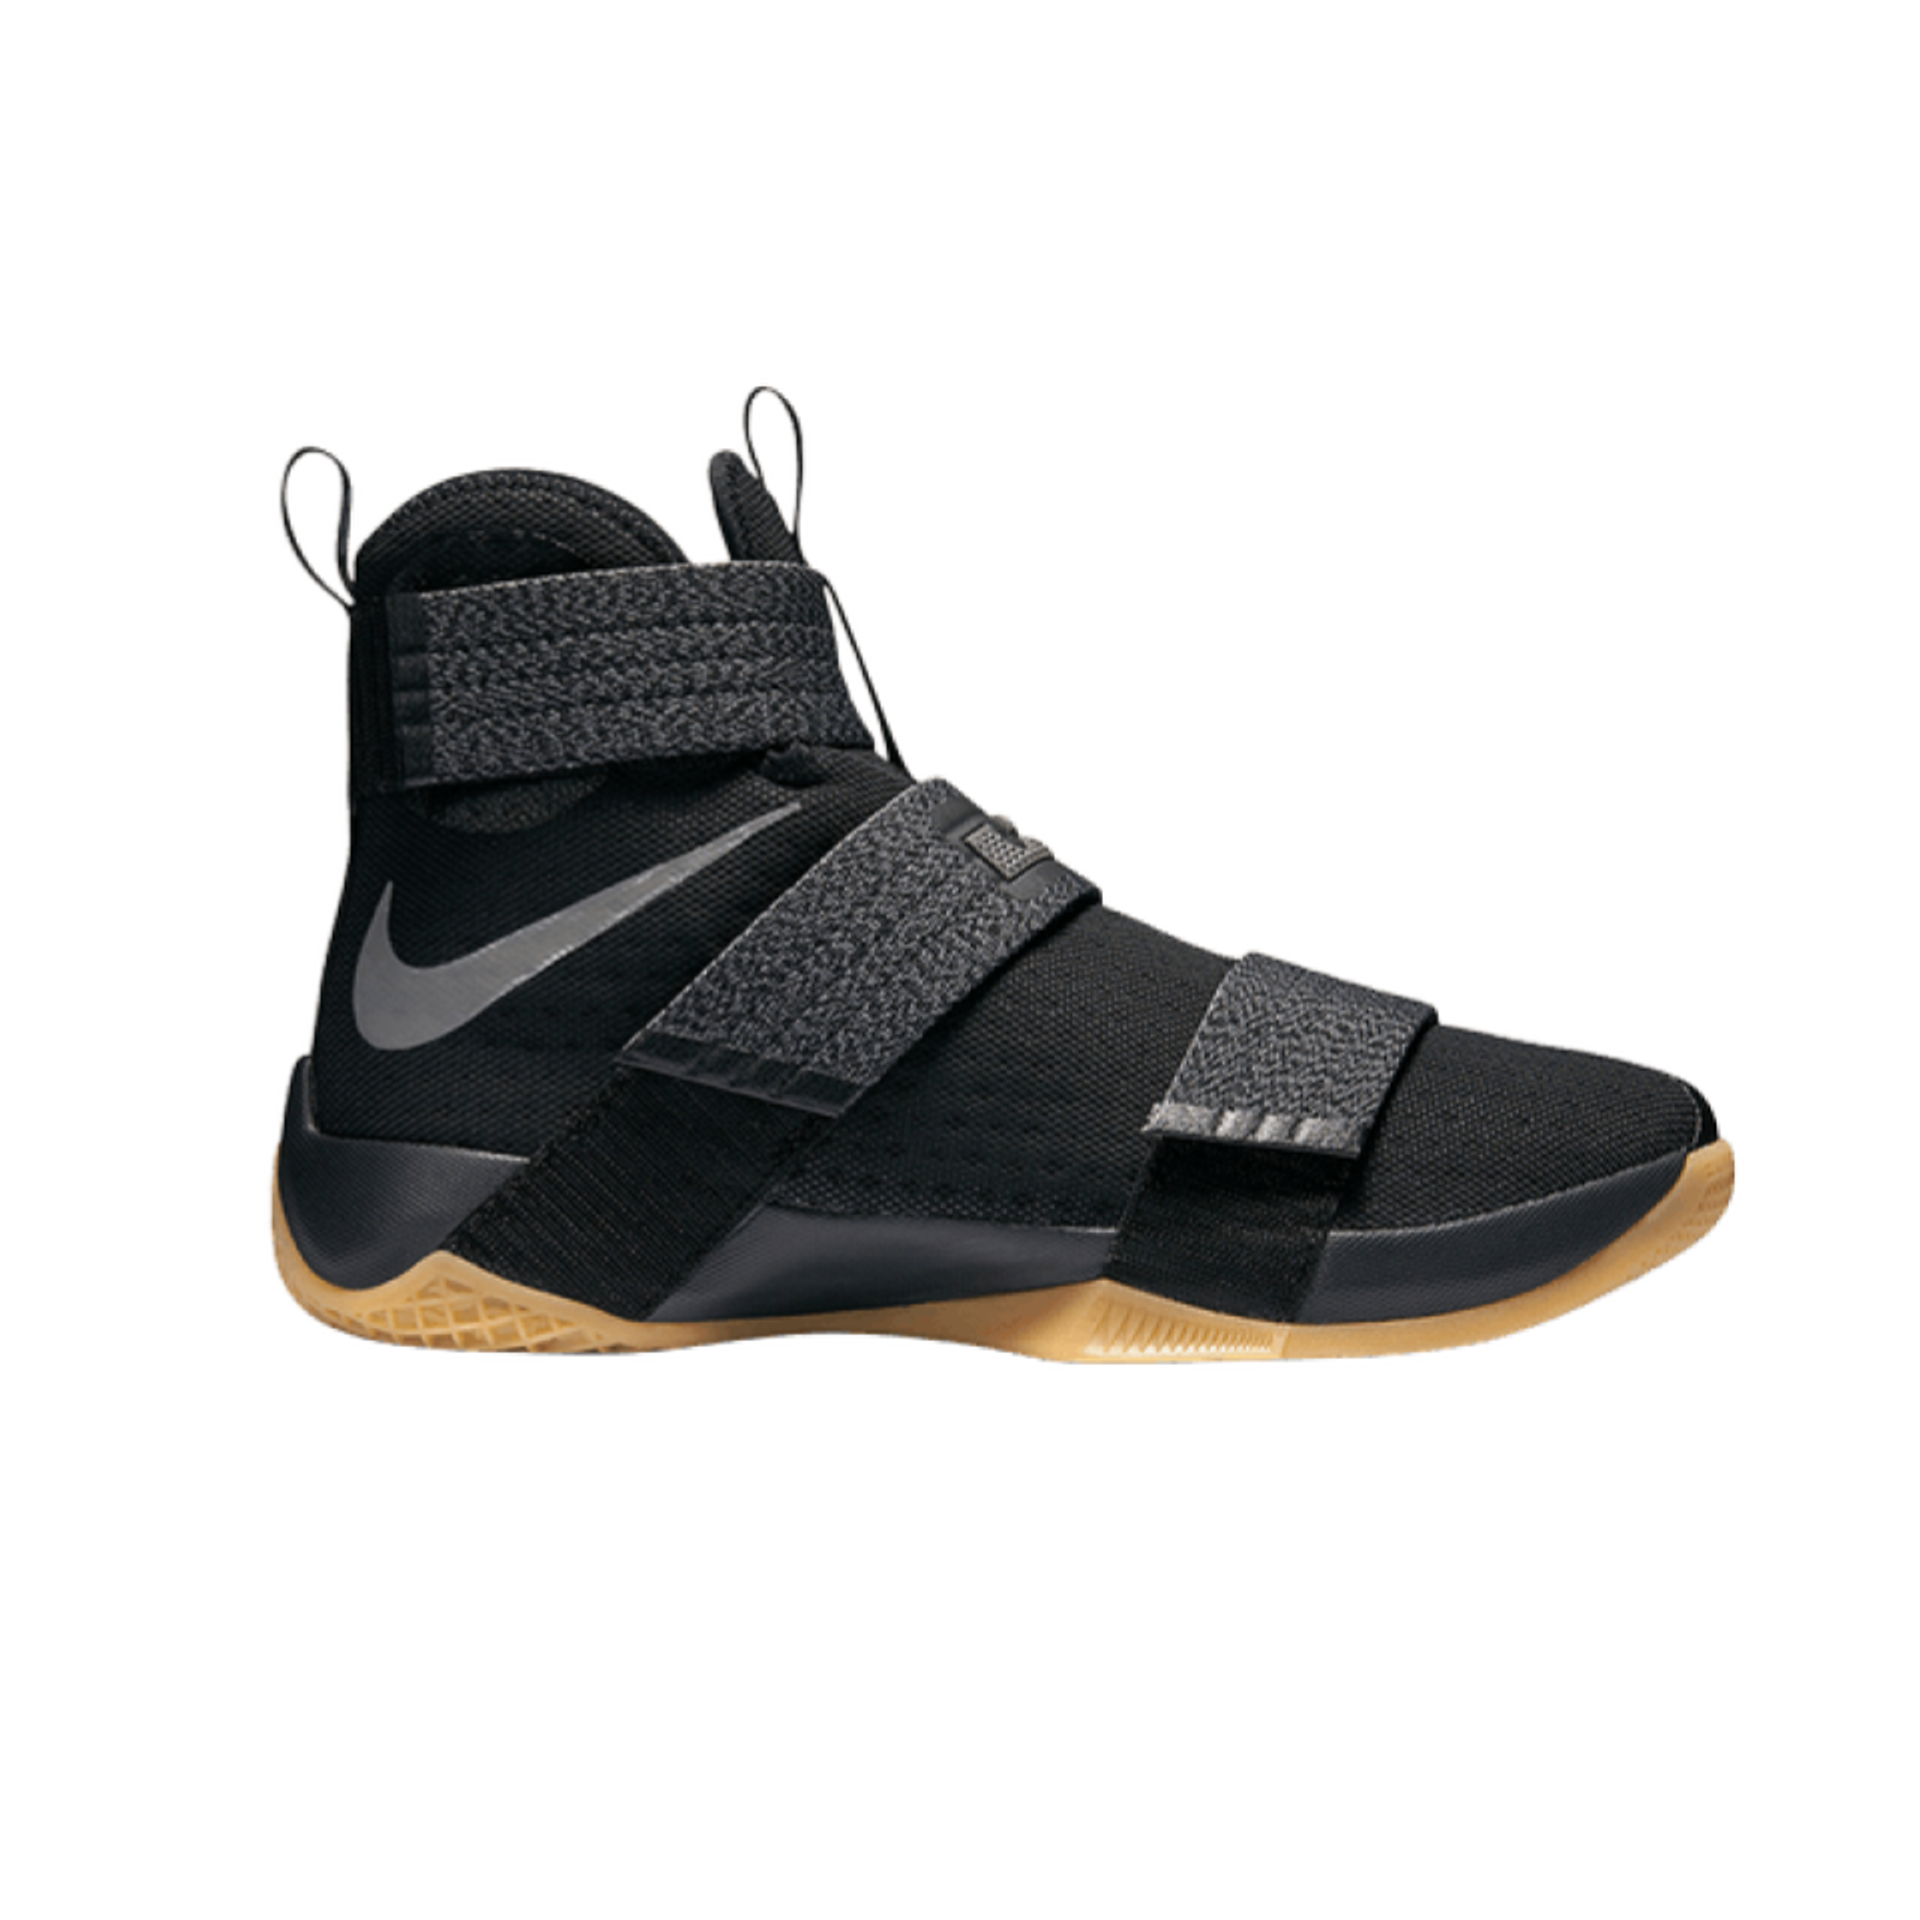 Nike LeBron Soldier 10 SFG 'Black Gum'